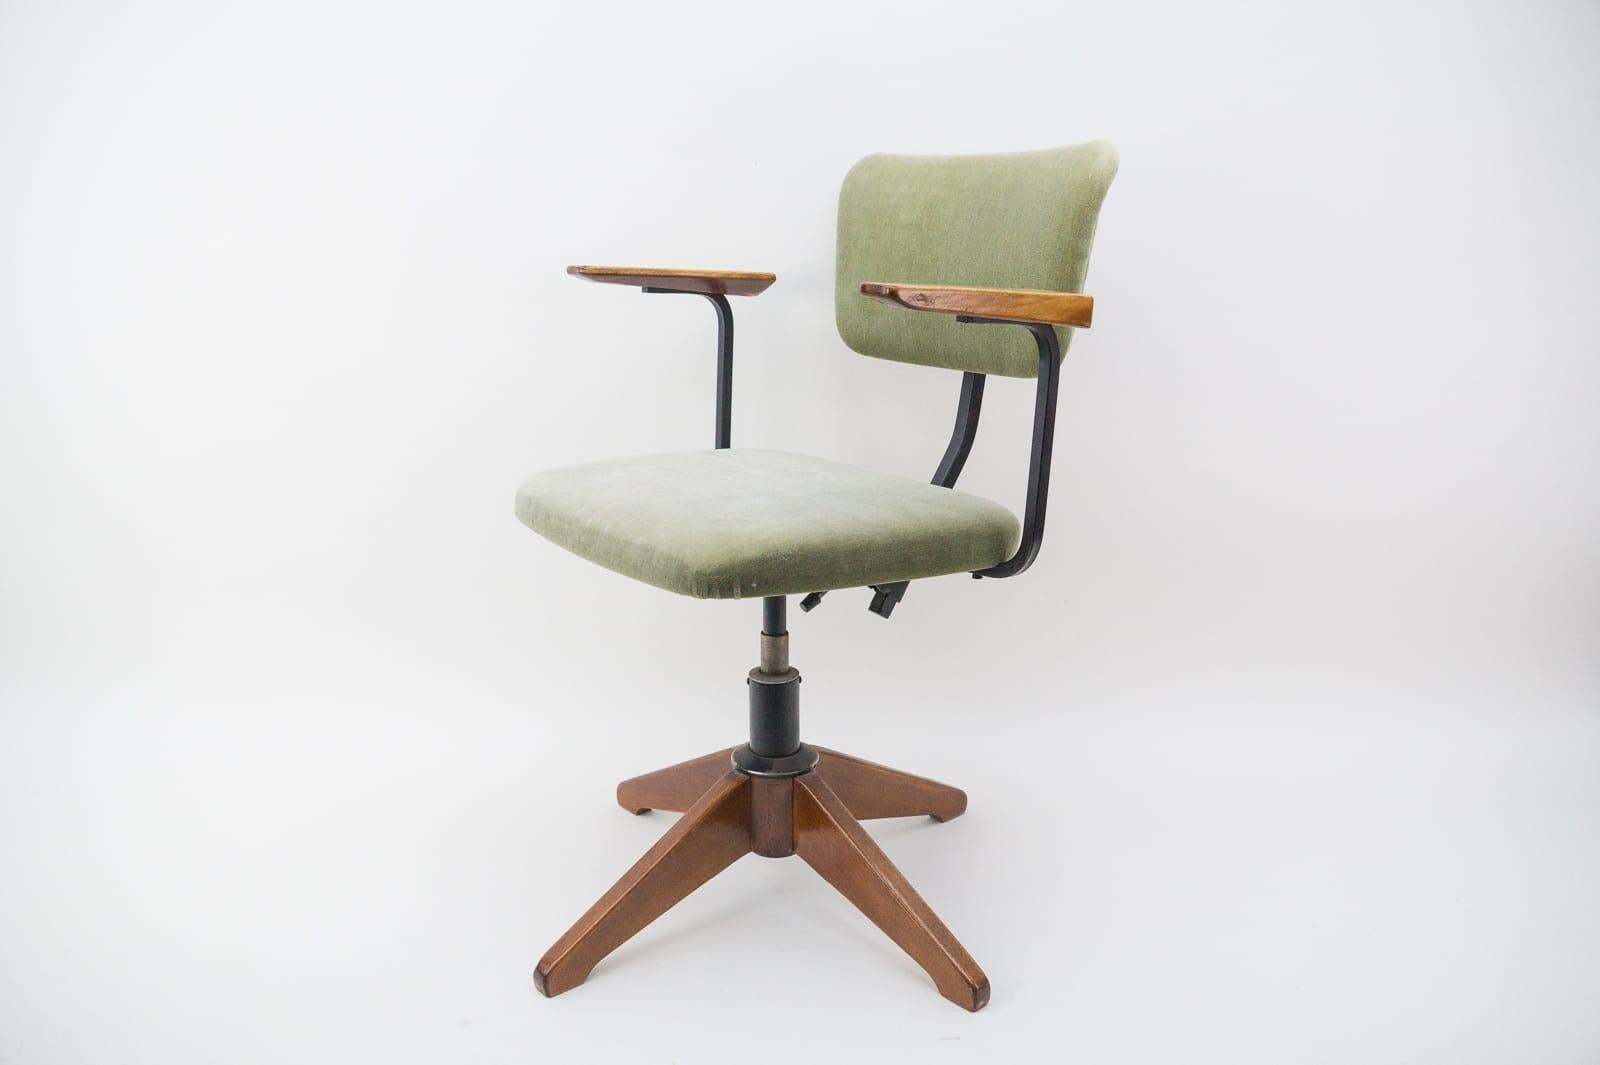 Mid-20th Century Very Rare Mid-Century Modern Office Chair by Sedus, 1960s Switzerland